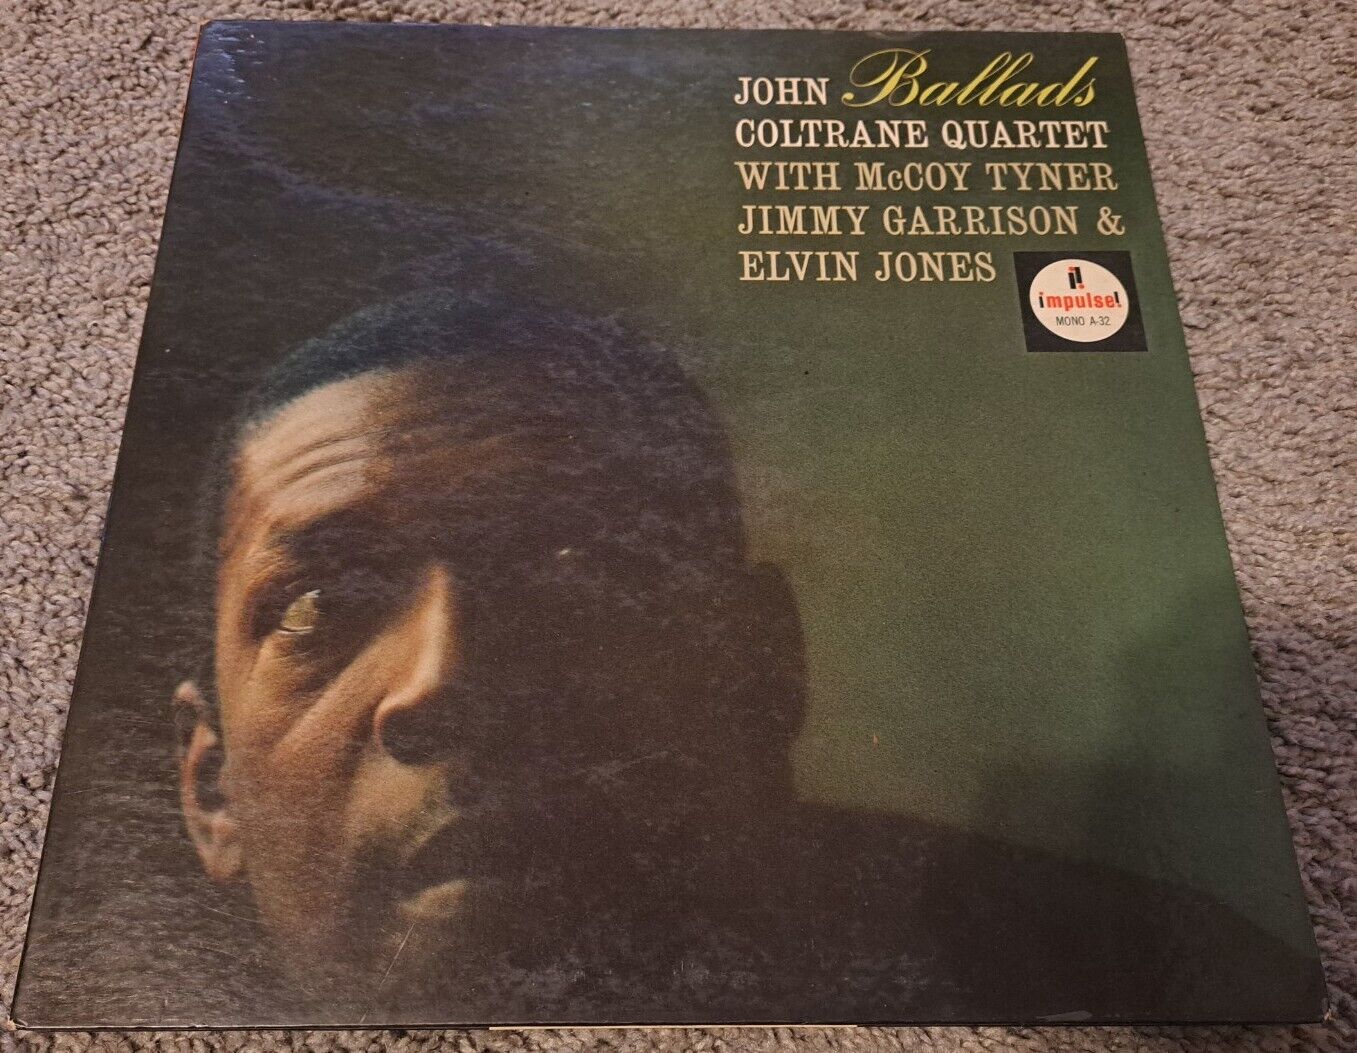 John Coltrane - Ballads LP - Impulse - A-32 Mono AM-PAR